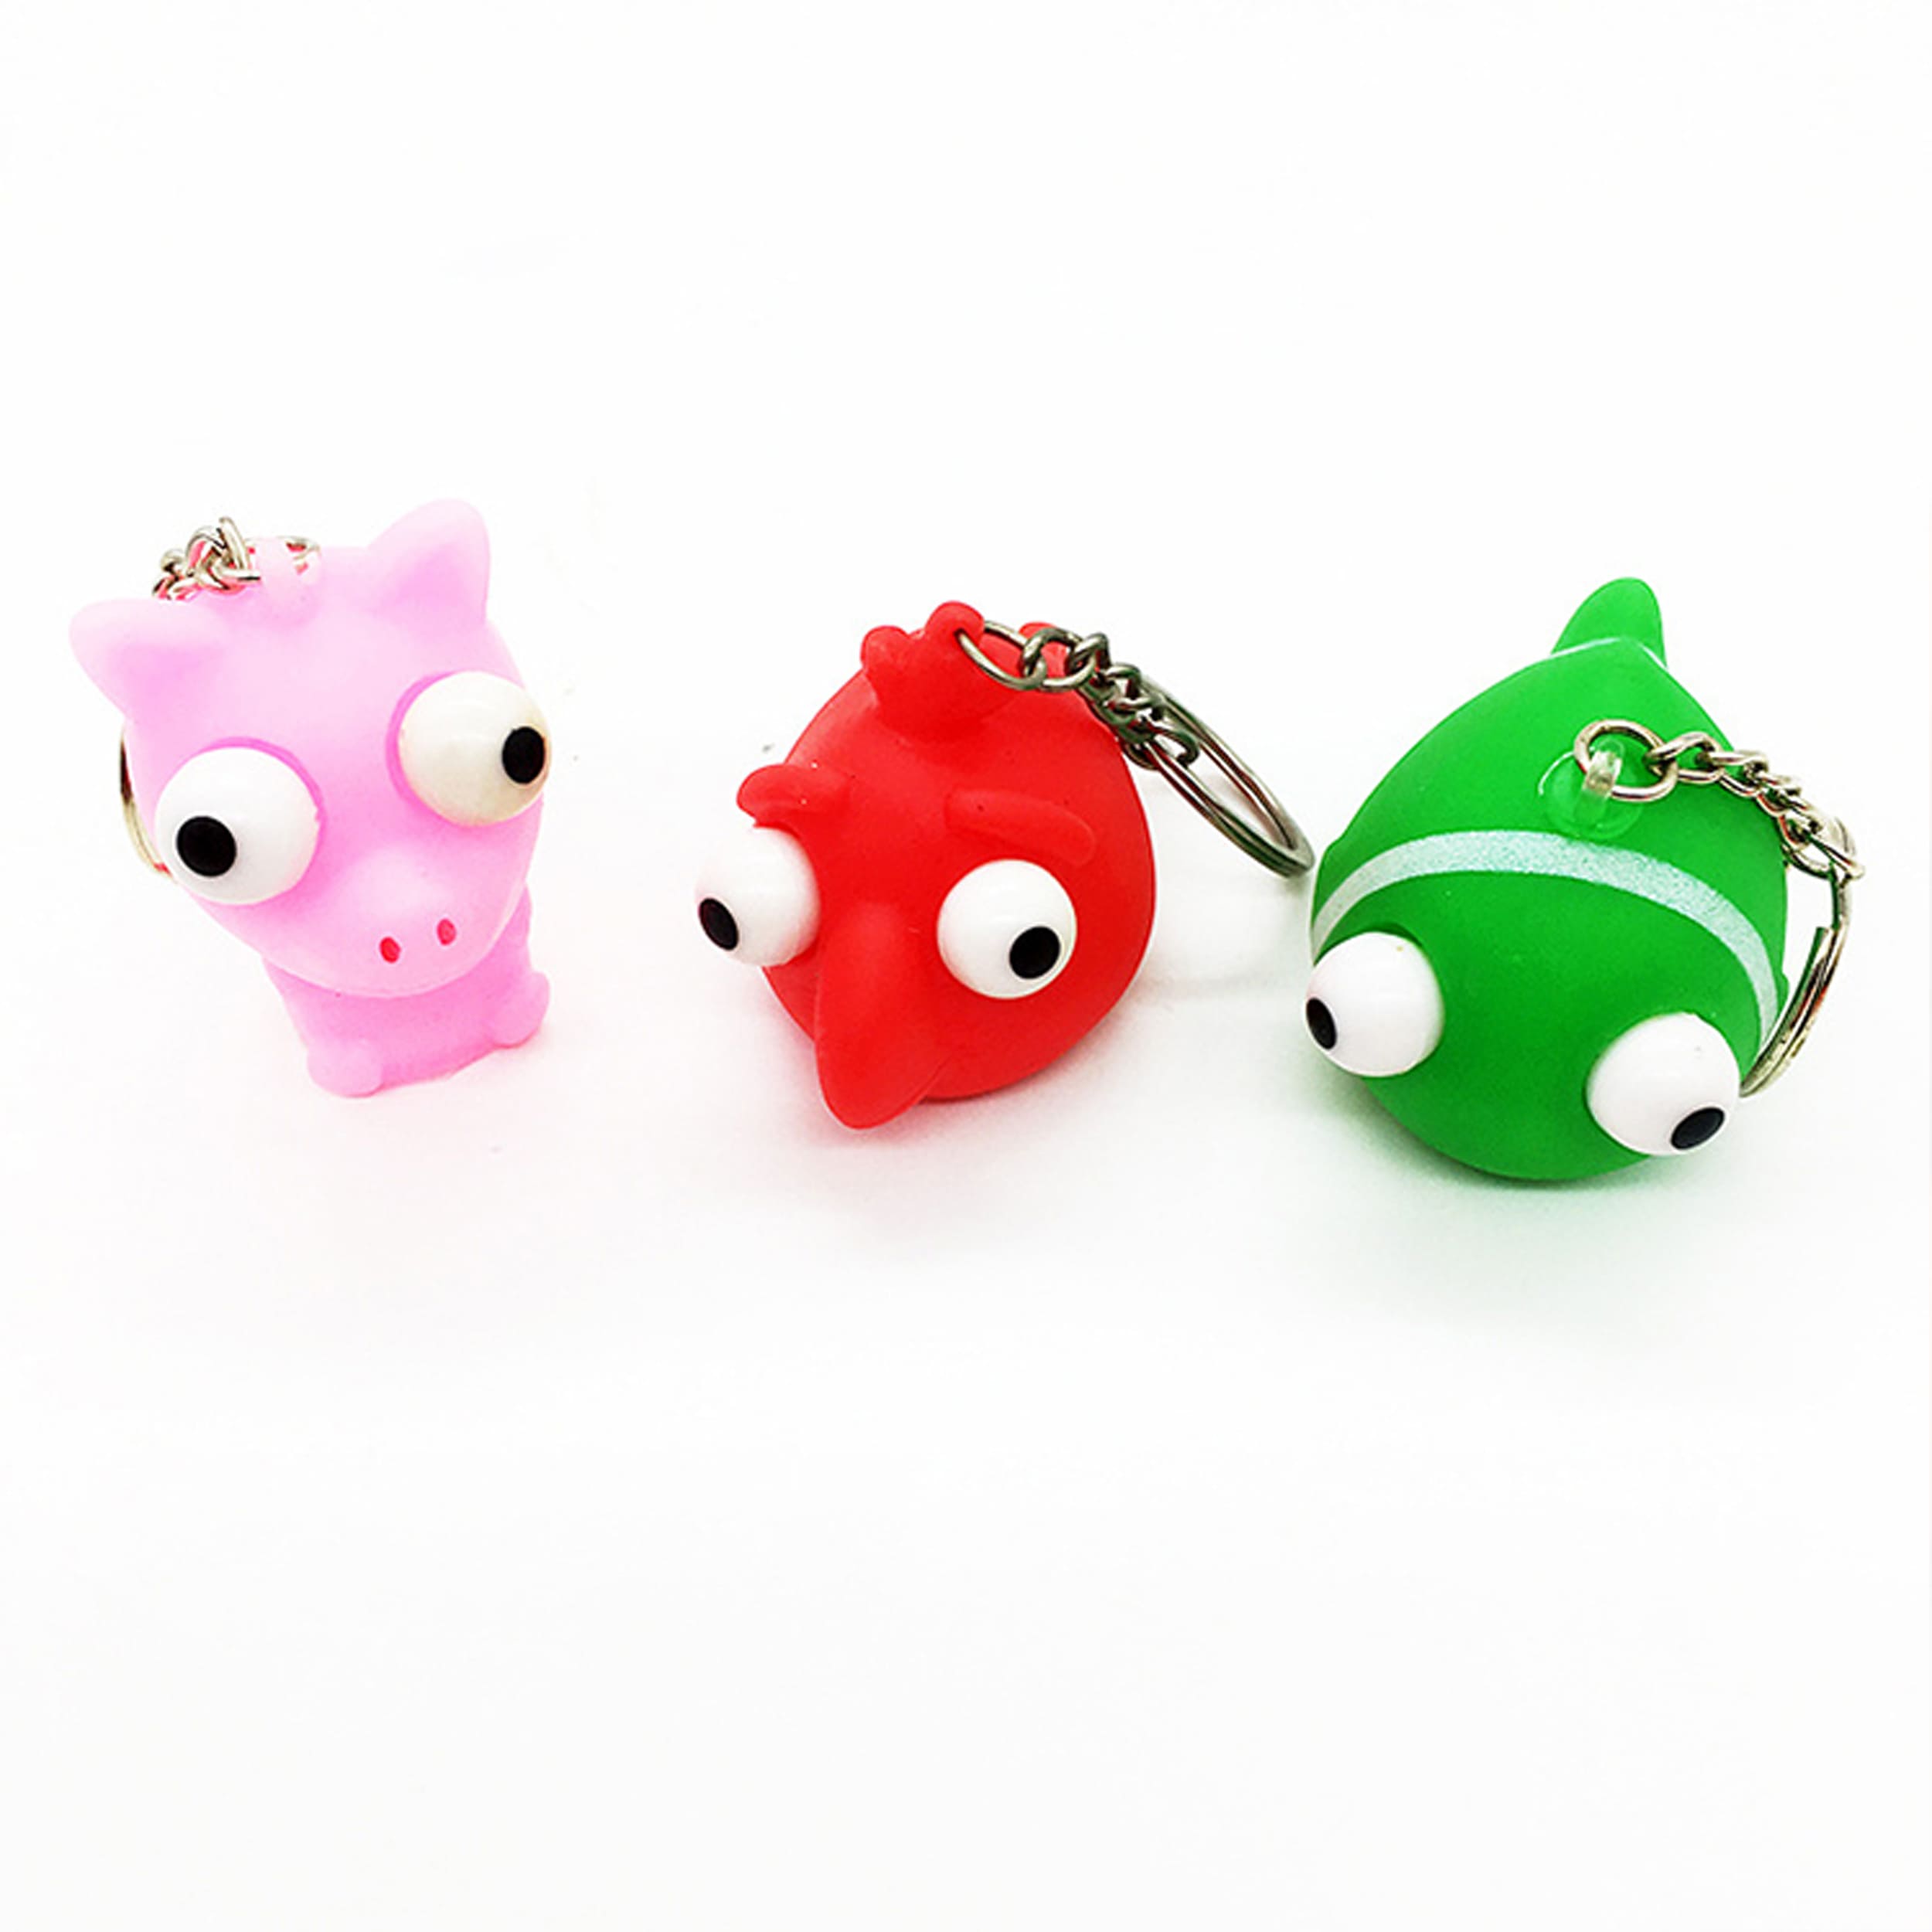 Pop Eye Animals Squishy Keychains